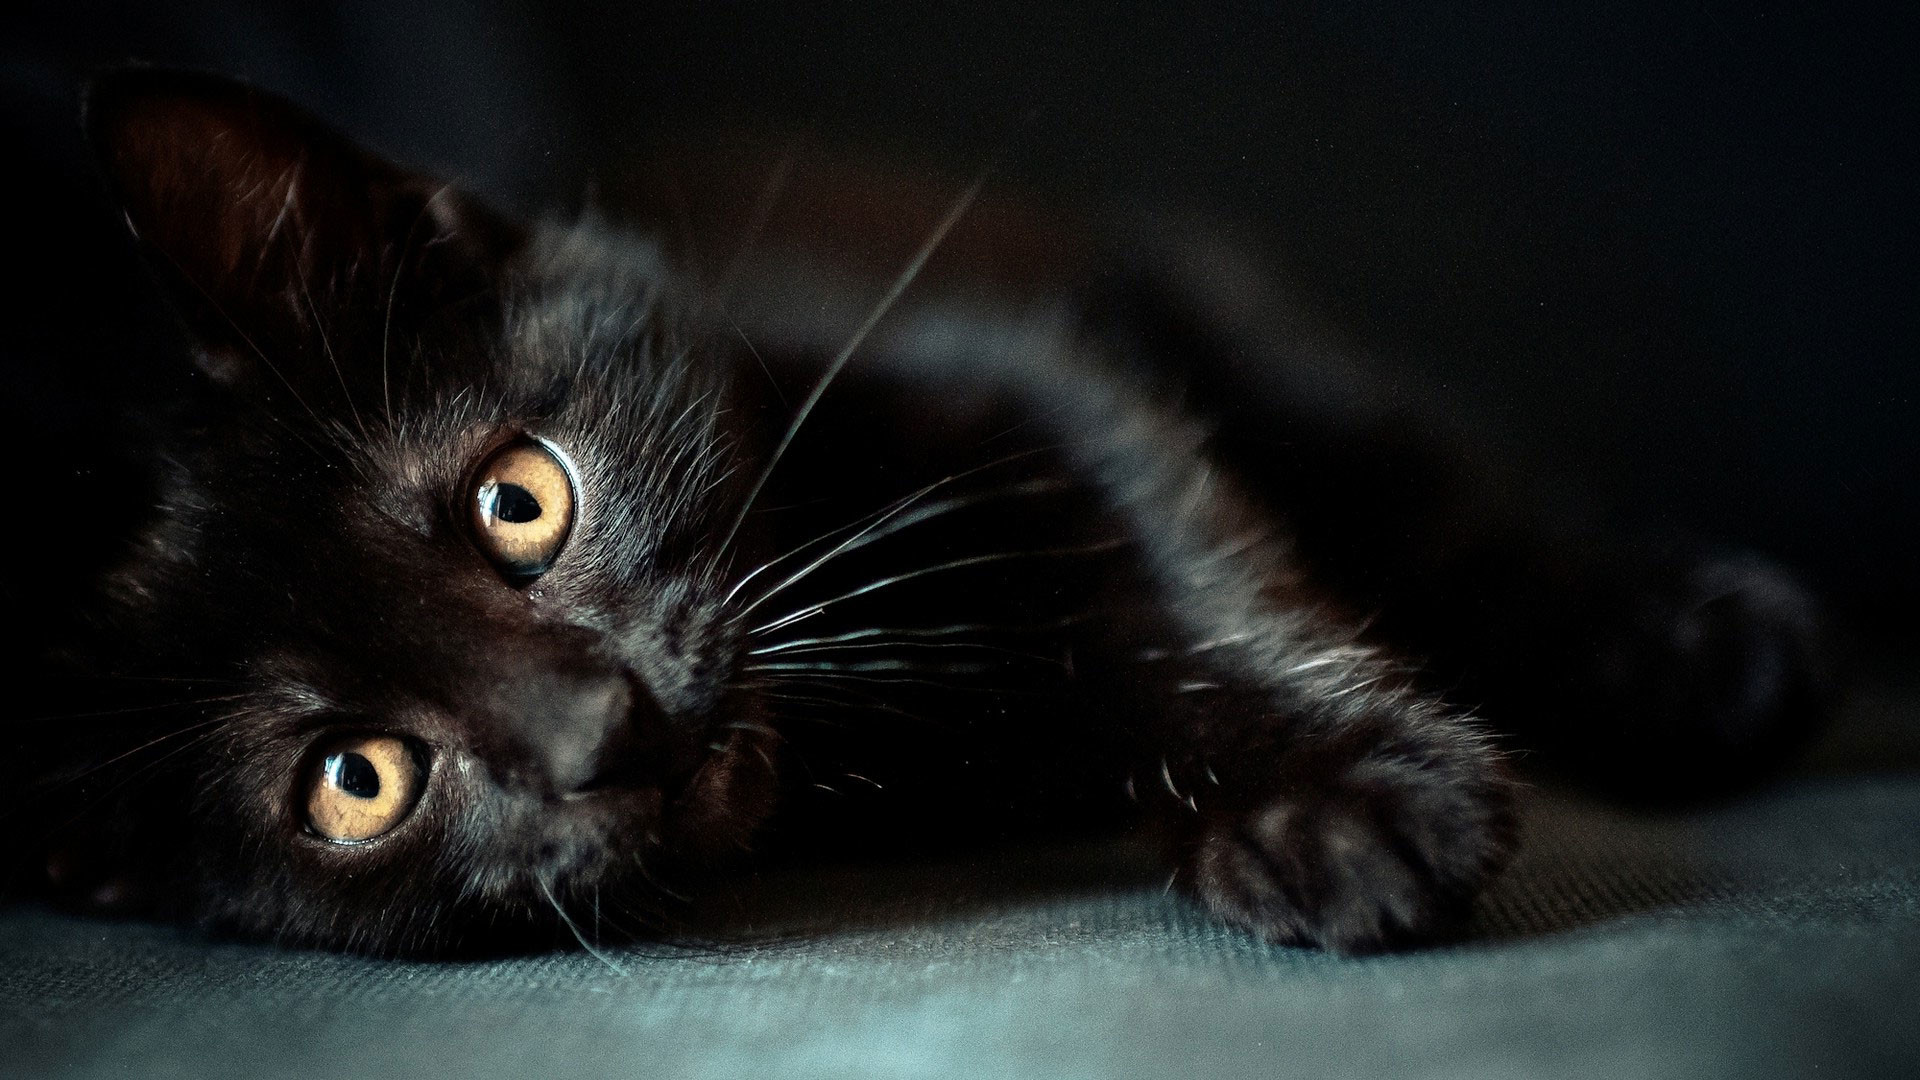 Hd pics photos cute pure full black cat attractive stunning hd quality desktop background wallpaper